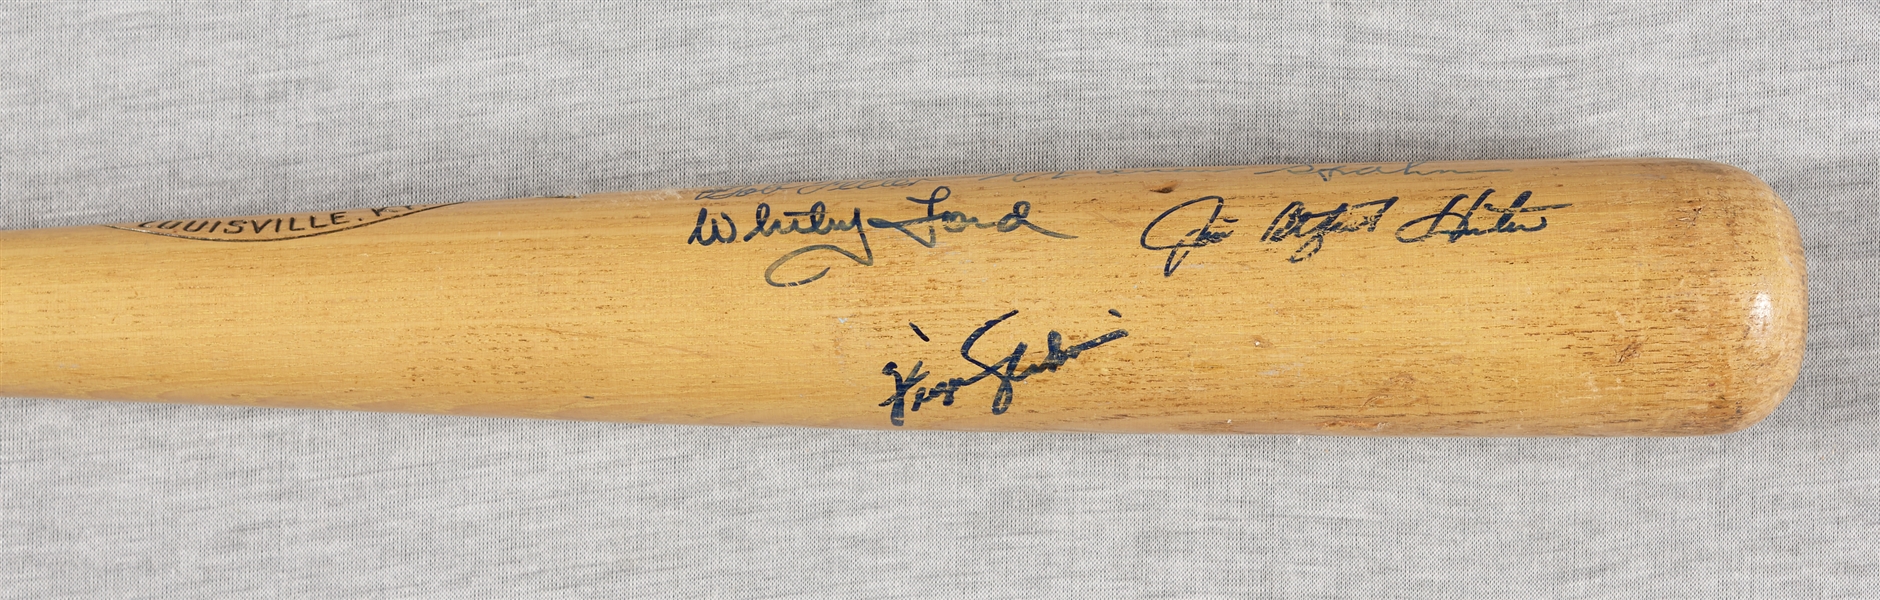 Hall of Fame Pitchers Multi-Signed Bat (7) (BAS)